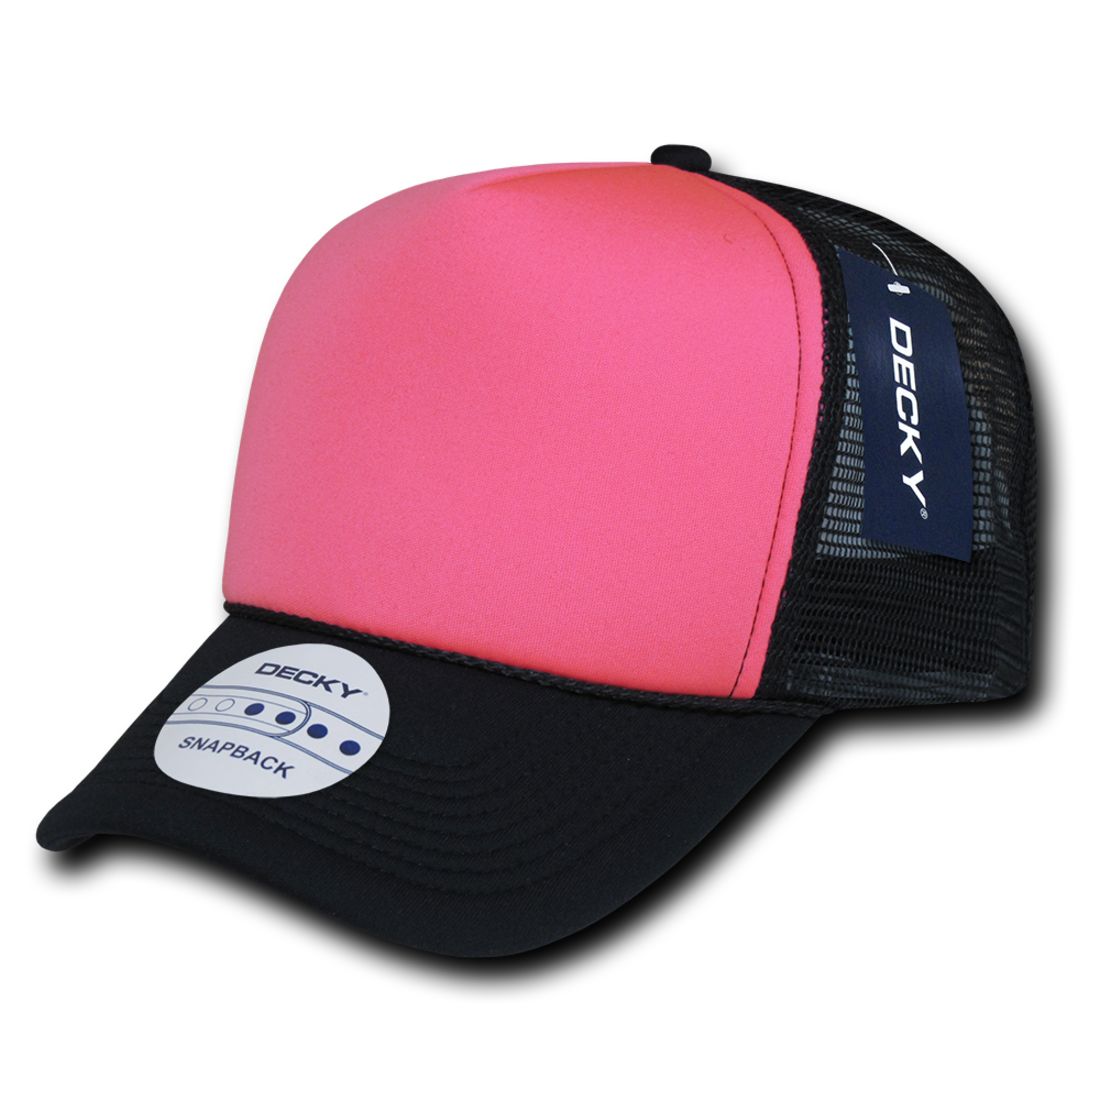 Black/Neon Pink color variant